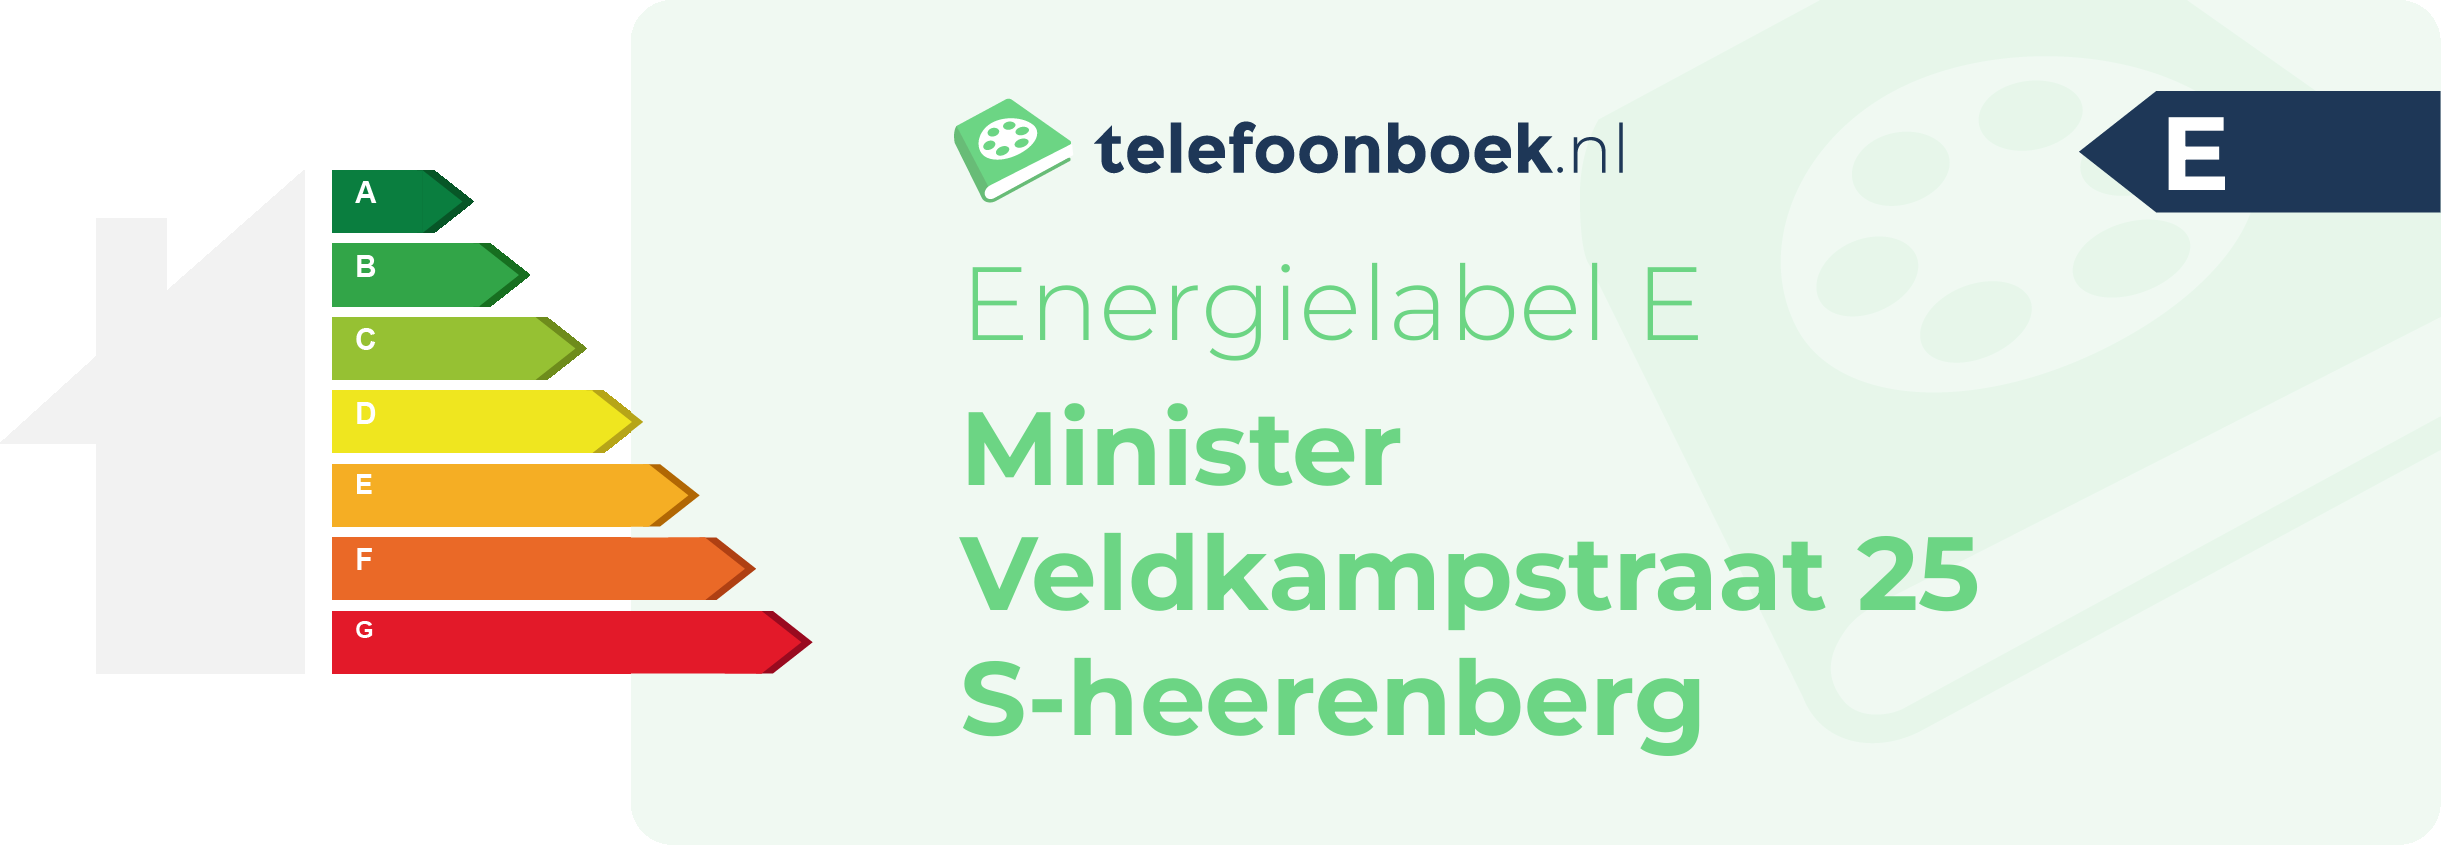 Energielabel Minister Veldkampstraat 25 S-Heerenberg